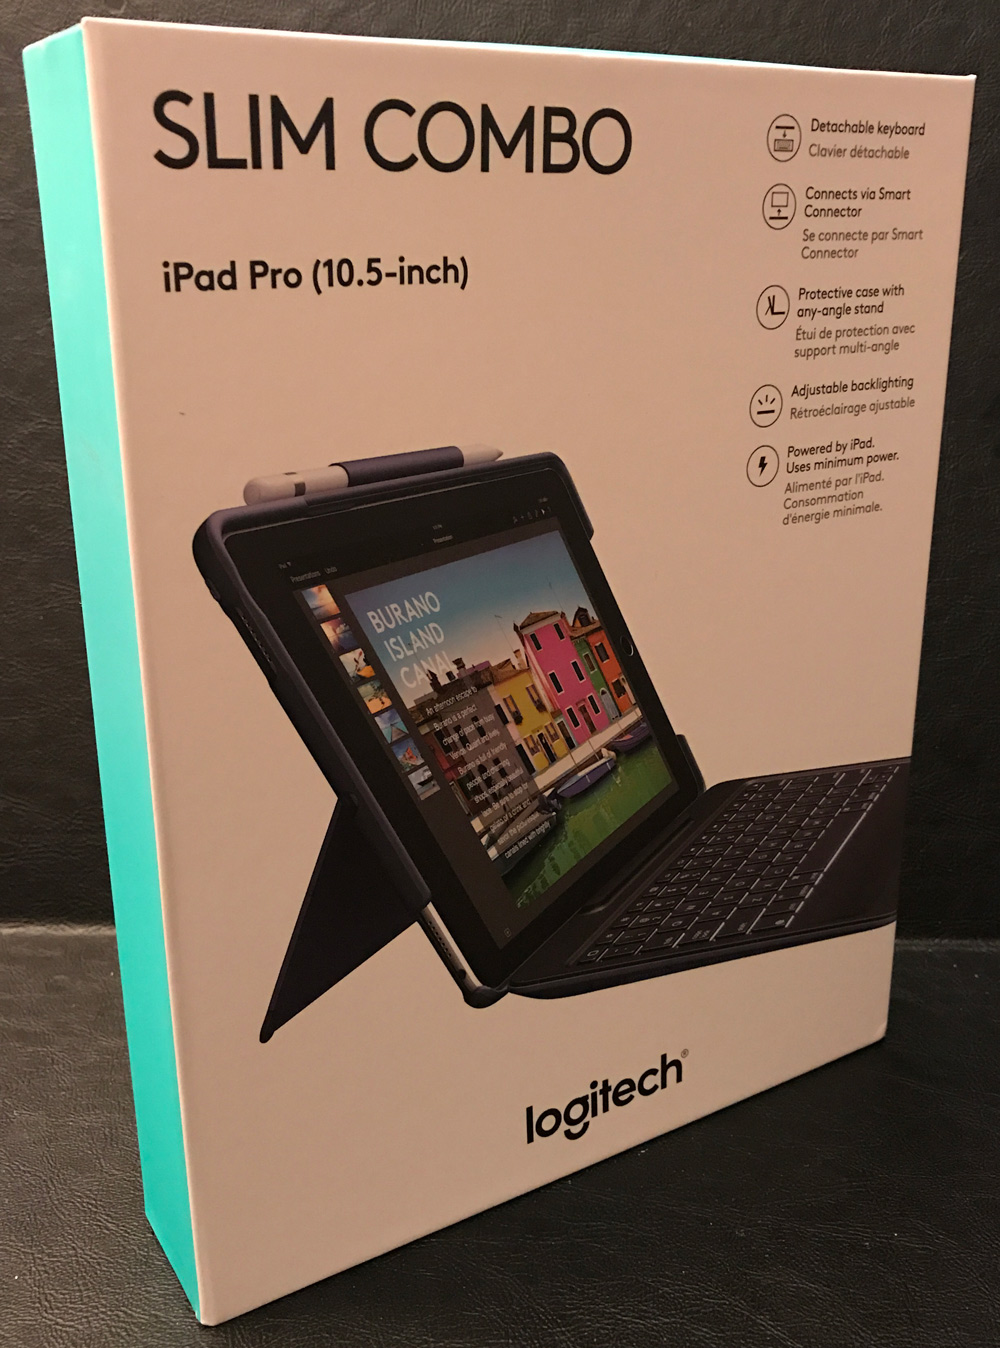 Transformer frugtbart Uovertruffen Logitech Slim Combo 10.5 inch iPad Pro keyboard case review - The Gadgeteer